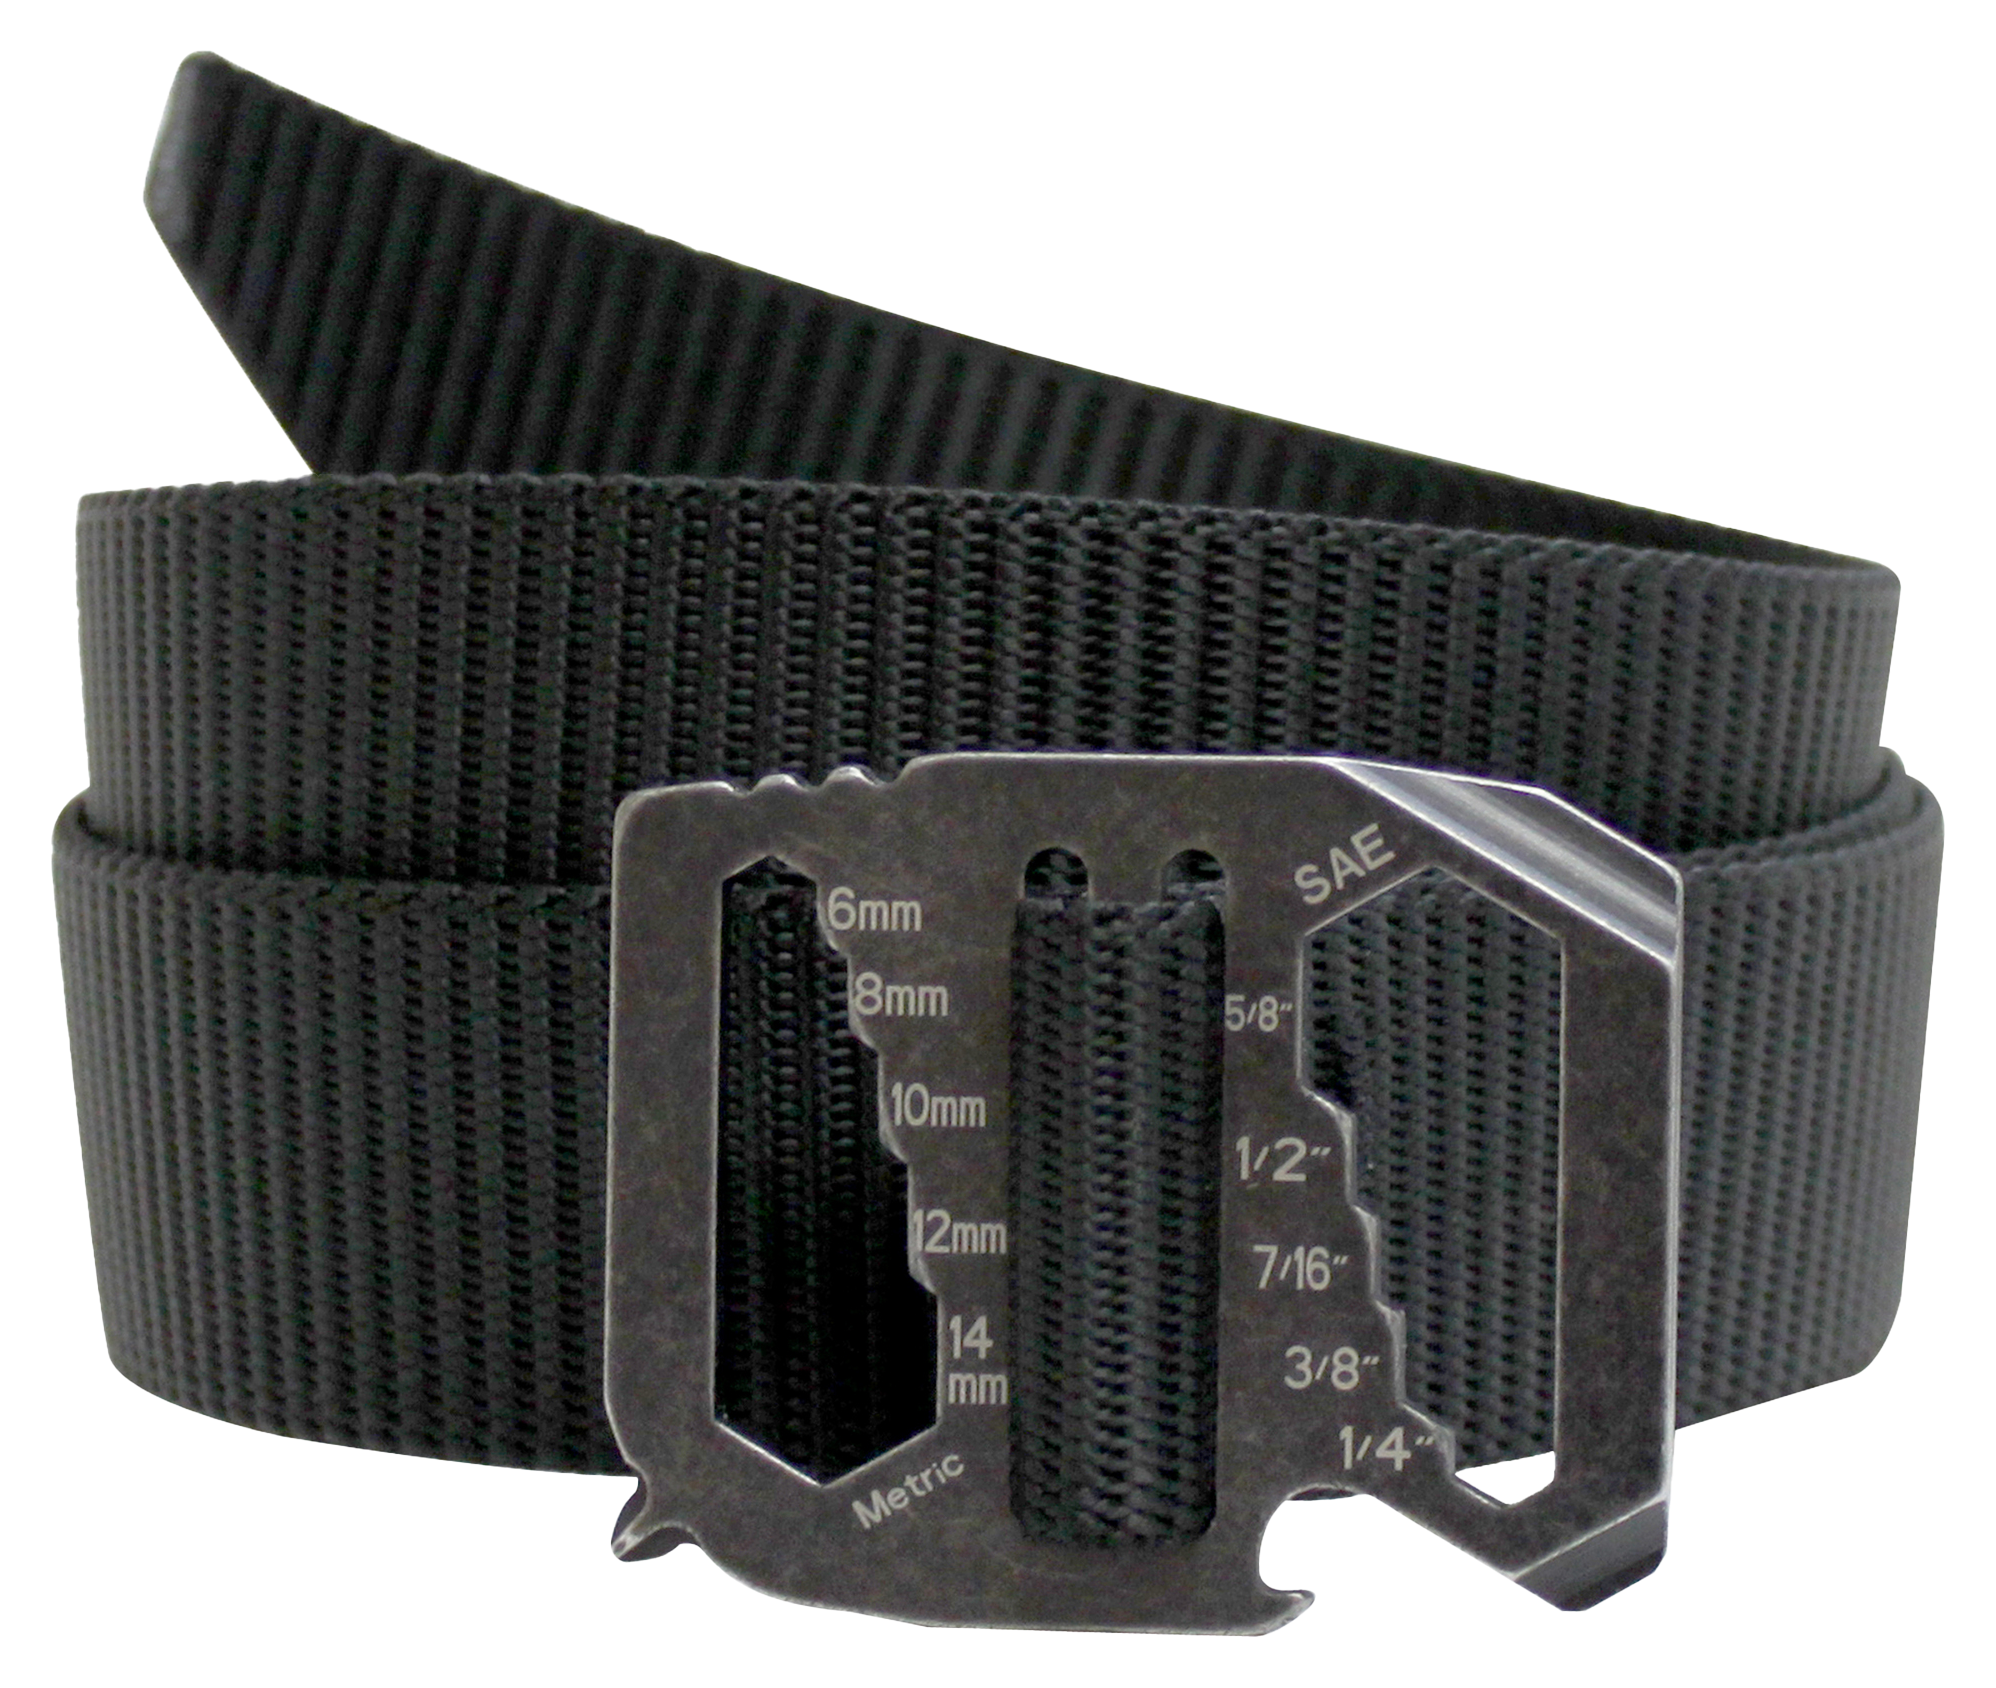 Bison Designs 38mm Kool Tool Belt - 2XL